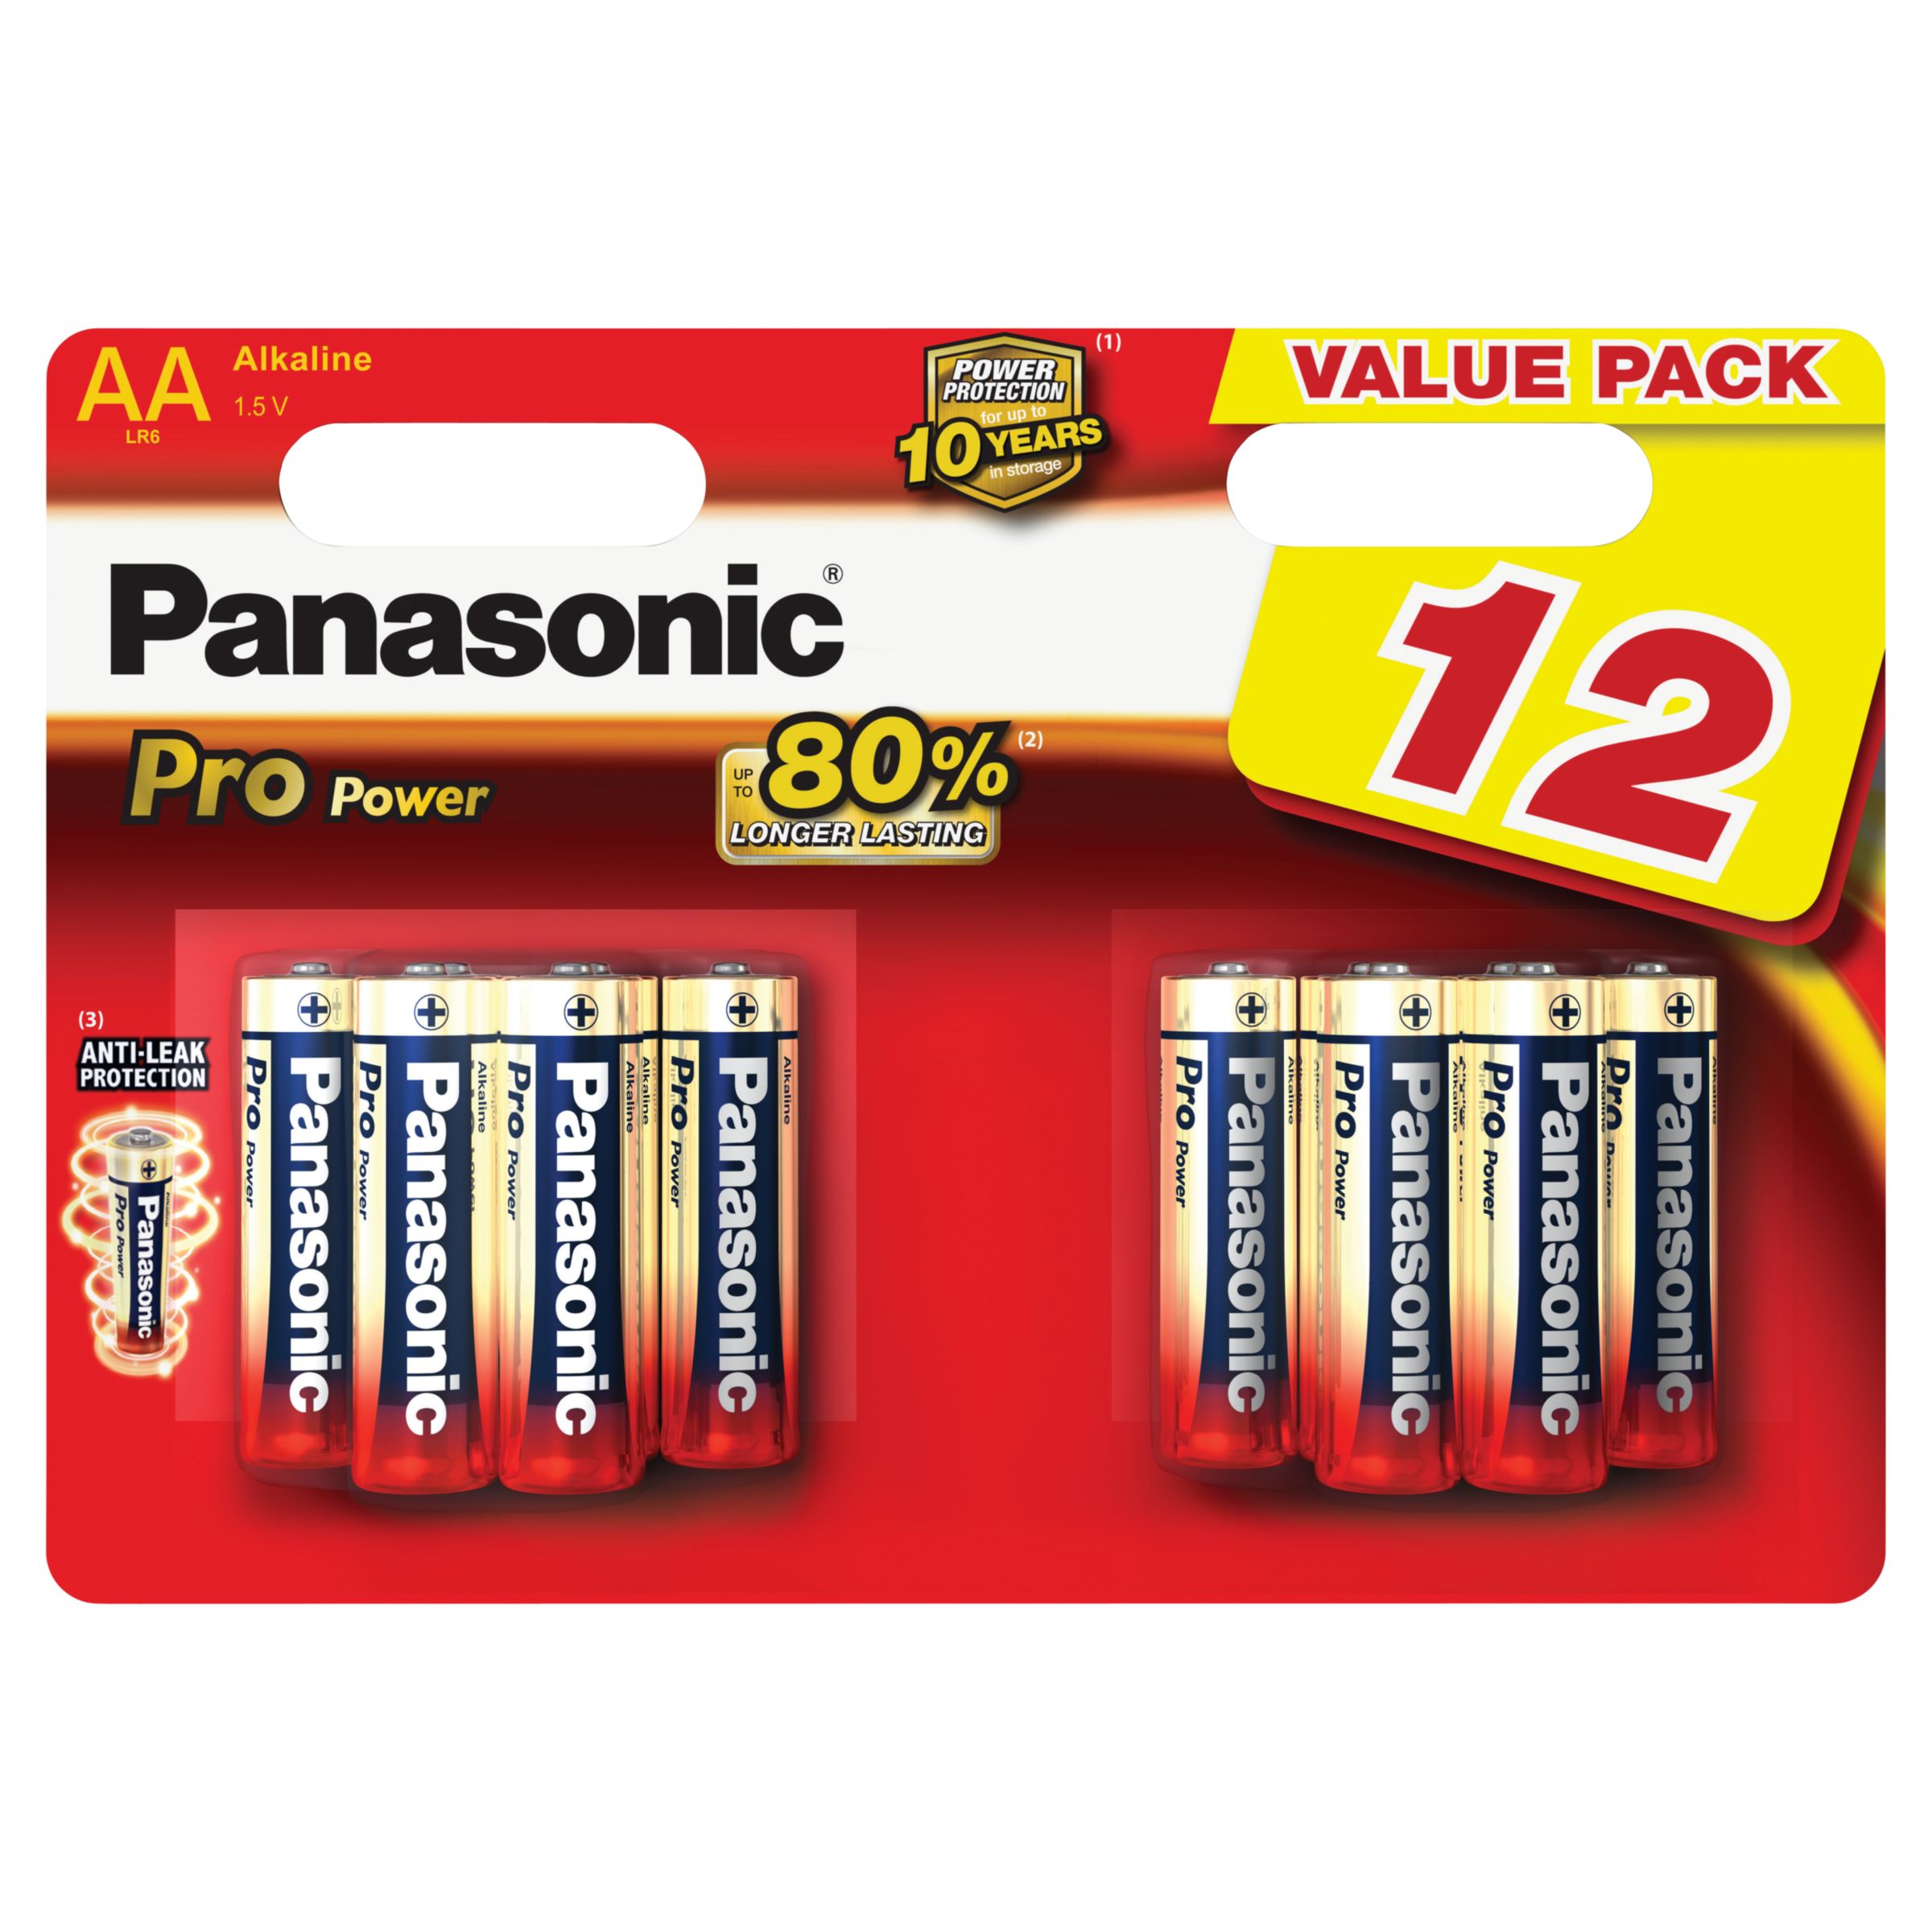 Panasonic Pro Power Alkaline AA Batteries, Pack of 12